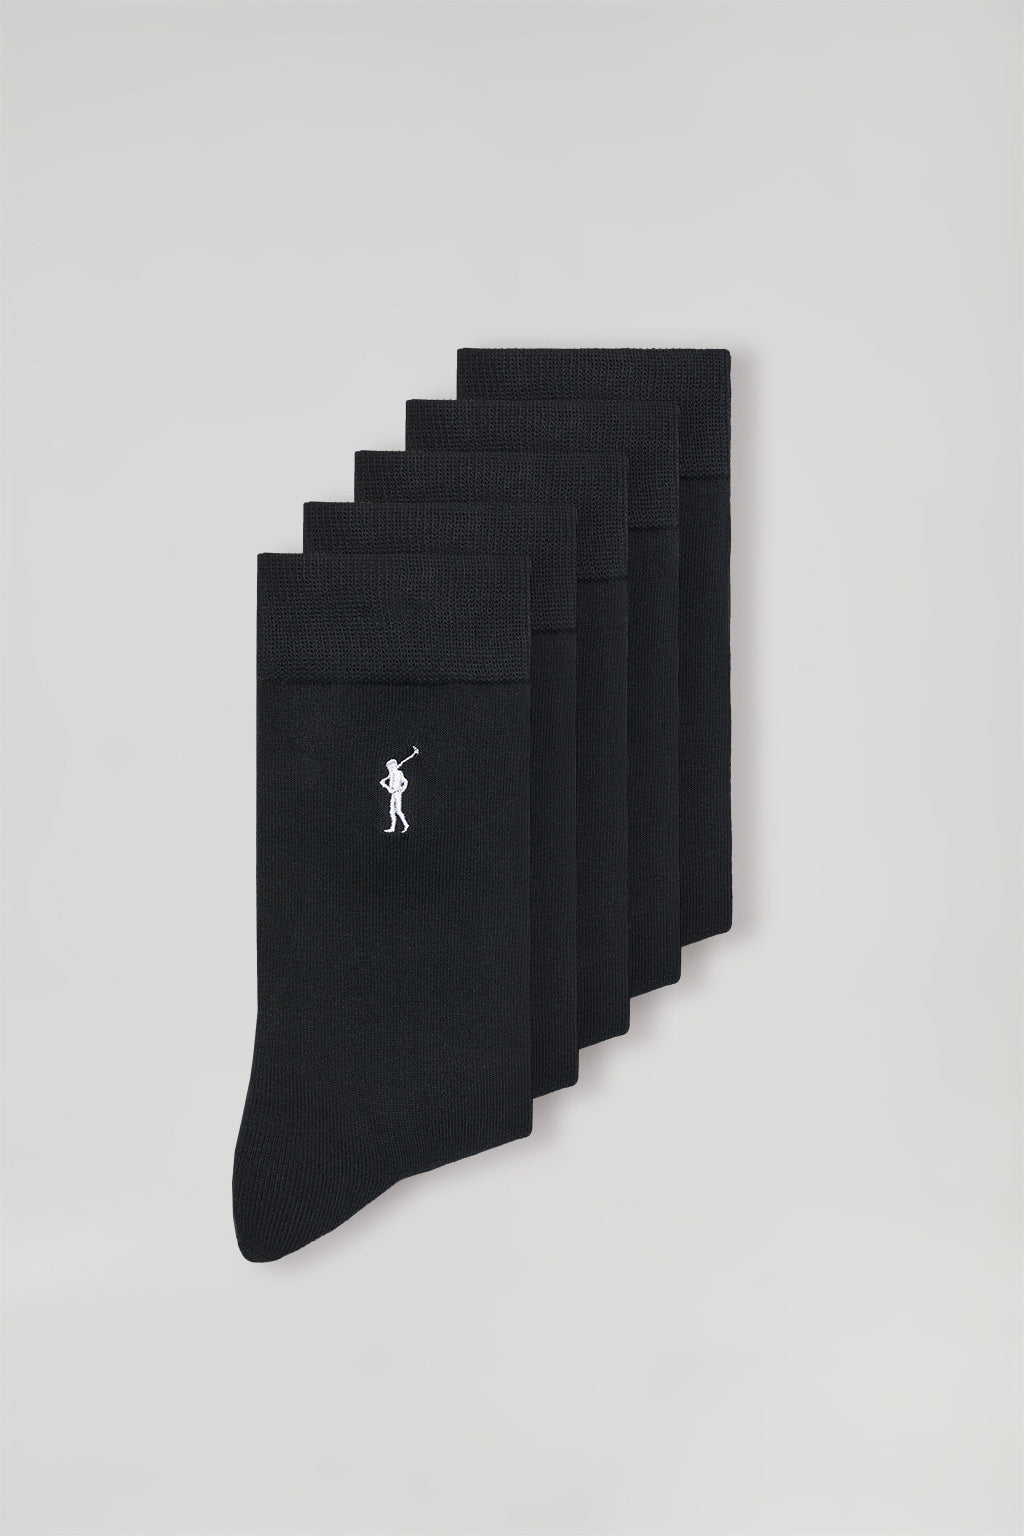 Pack de cinco pares de calcetines negros con logo Rigby Go – Polo Club